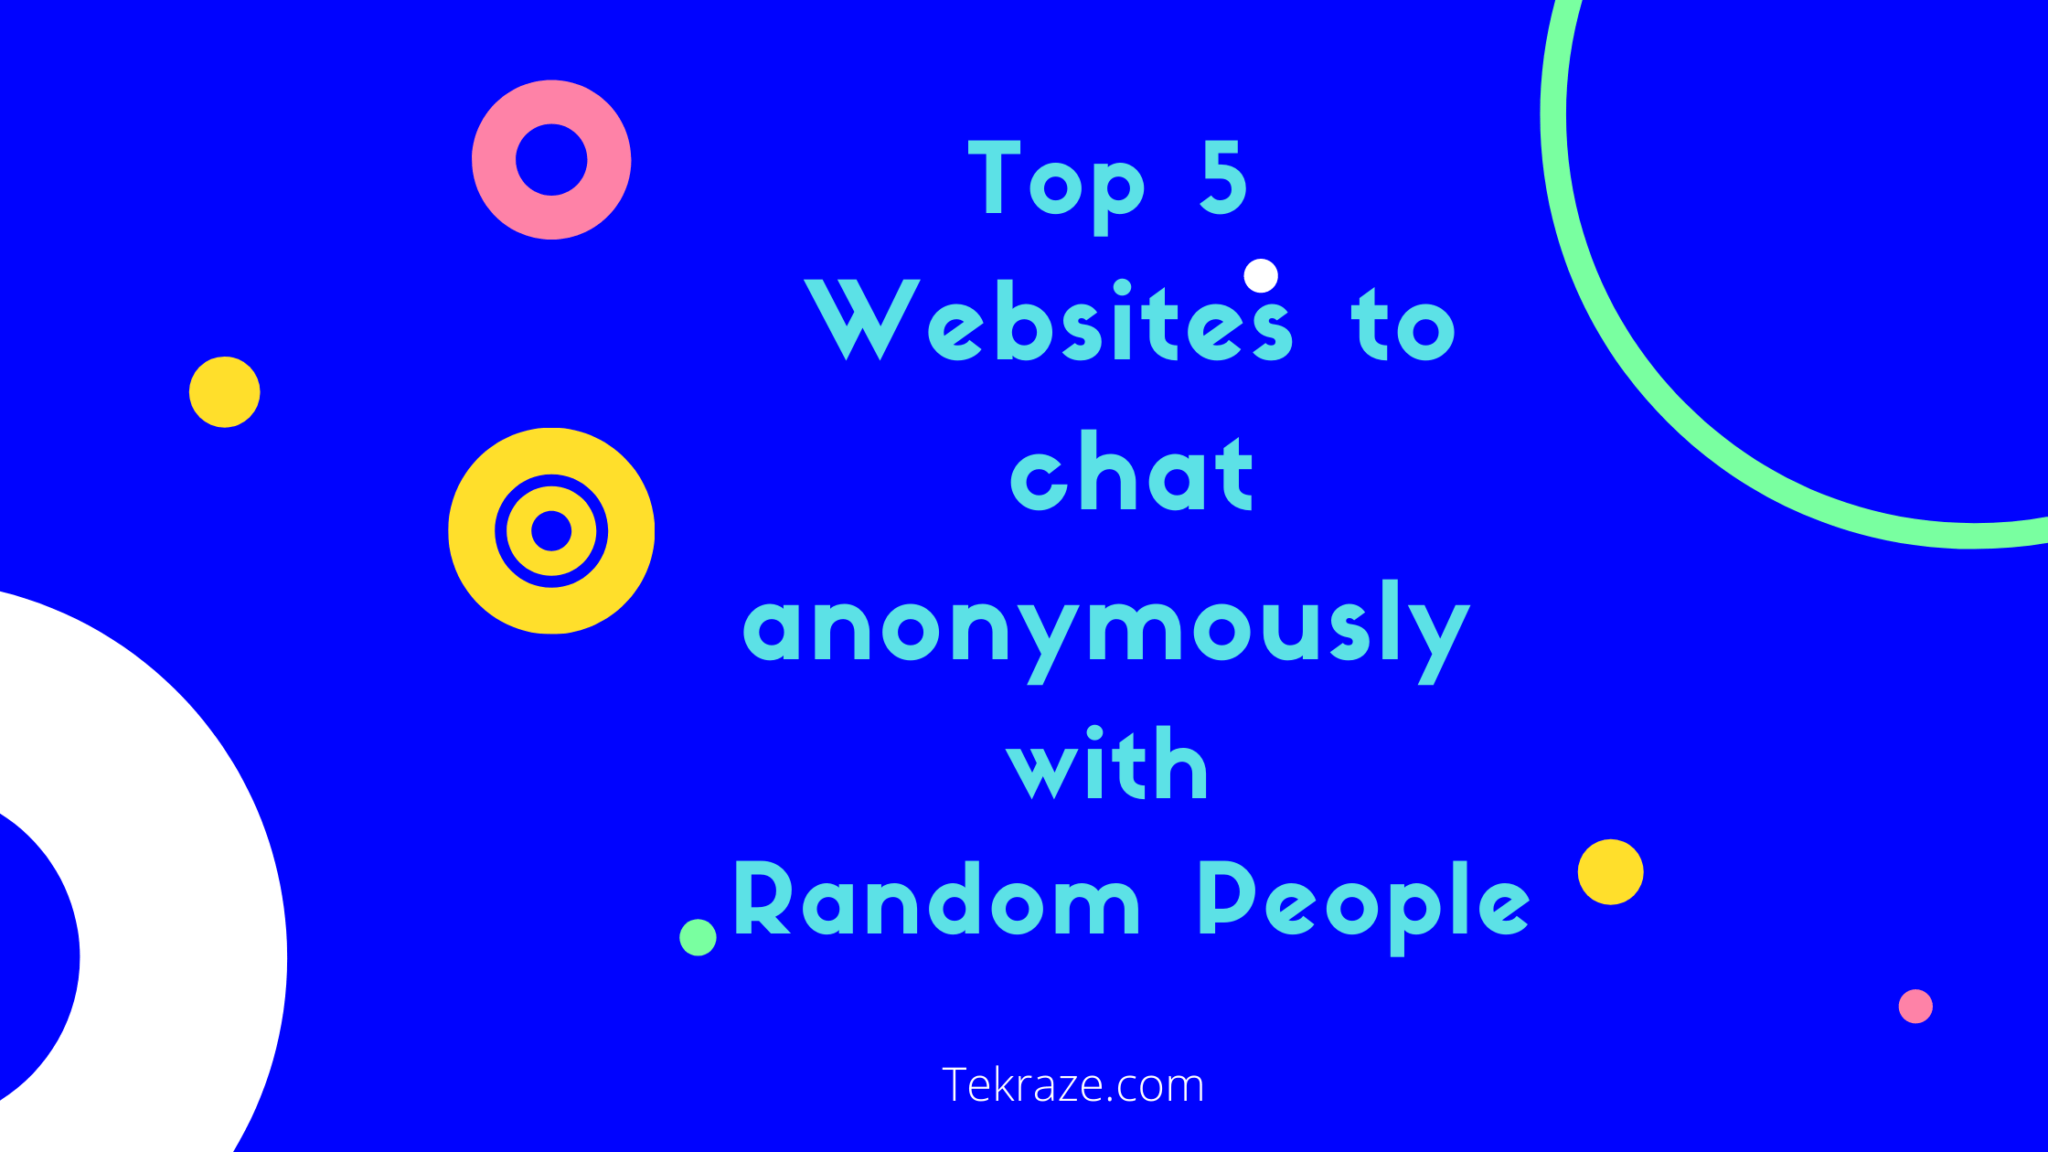 worlds most random websites